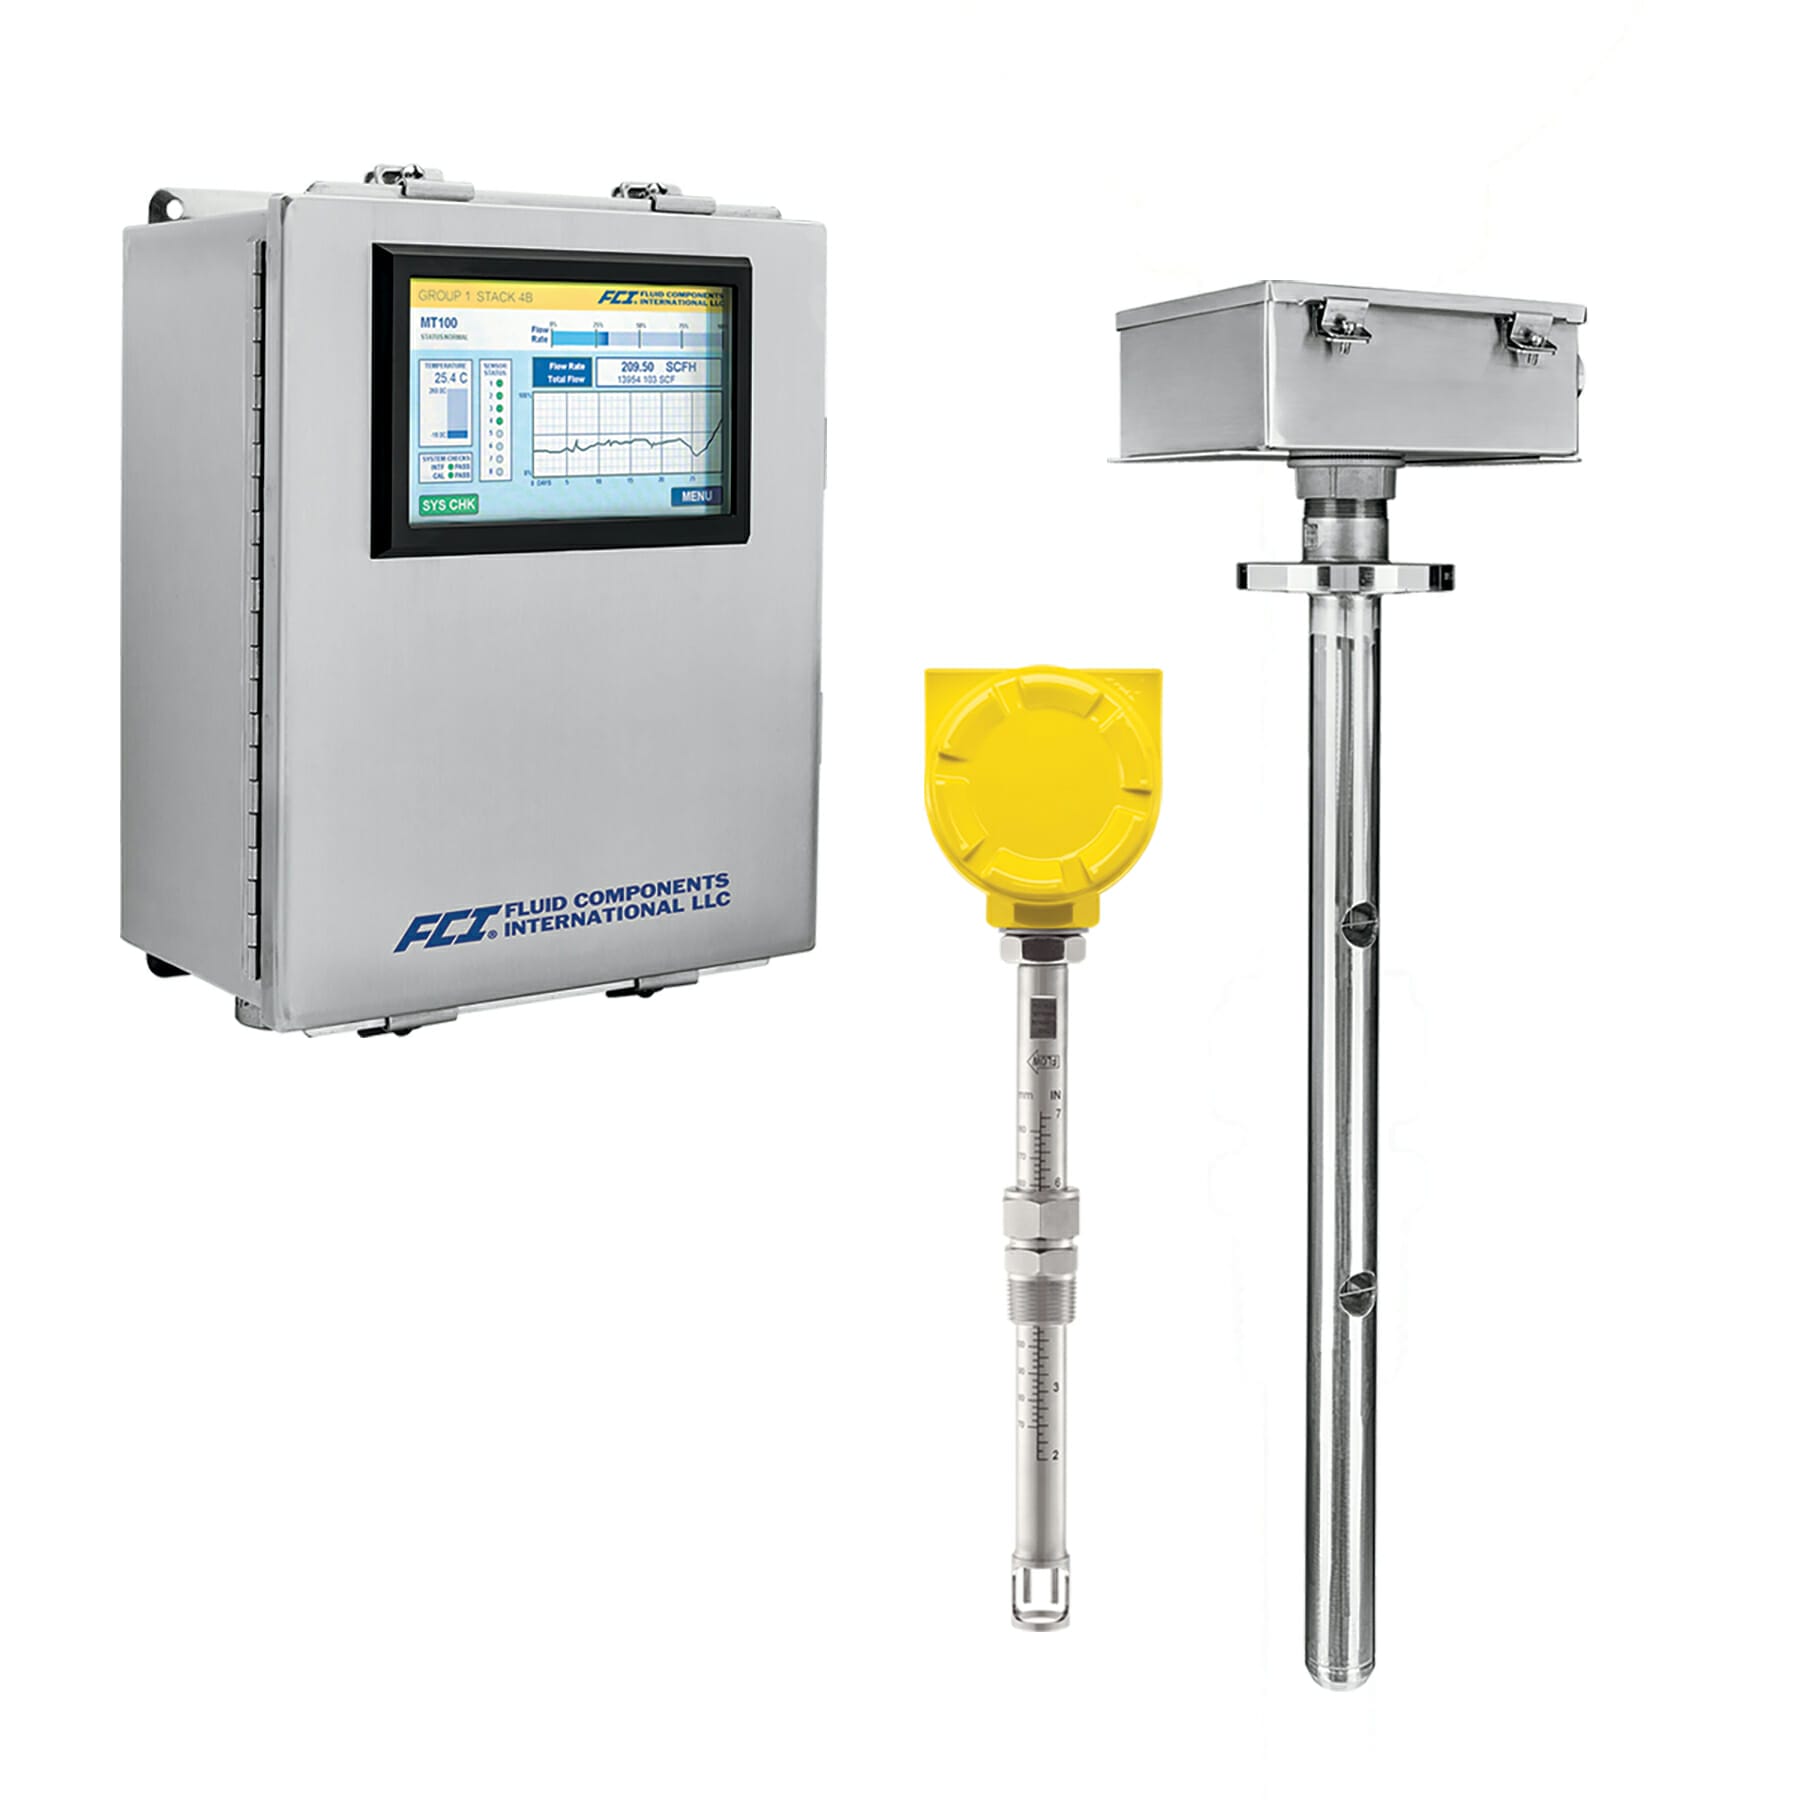 MT100 måler fra FCI består av koblingsboks og sensorer. Koblingsboks har display med knapper for logging, diagnose, og kalibrering.